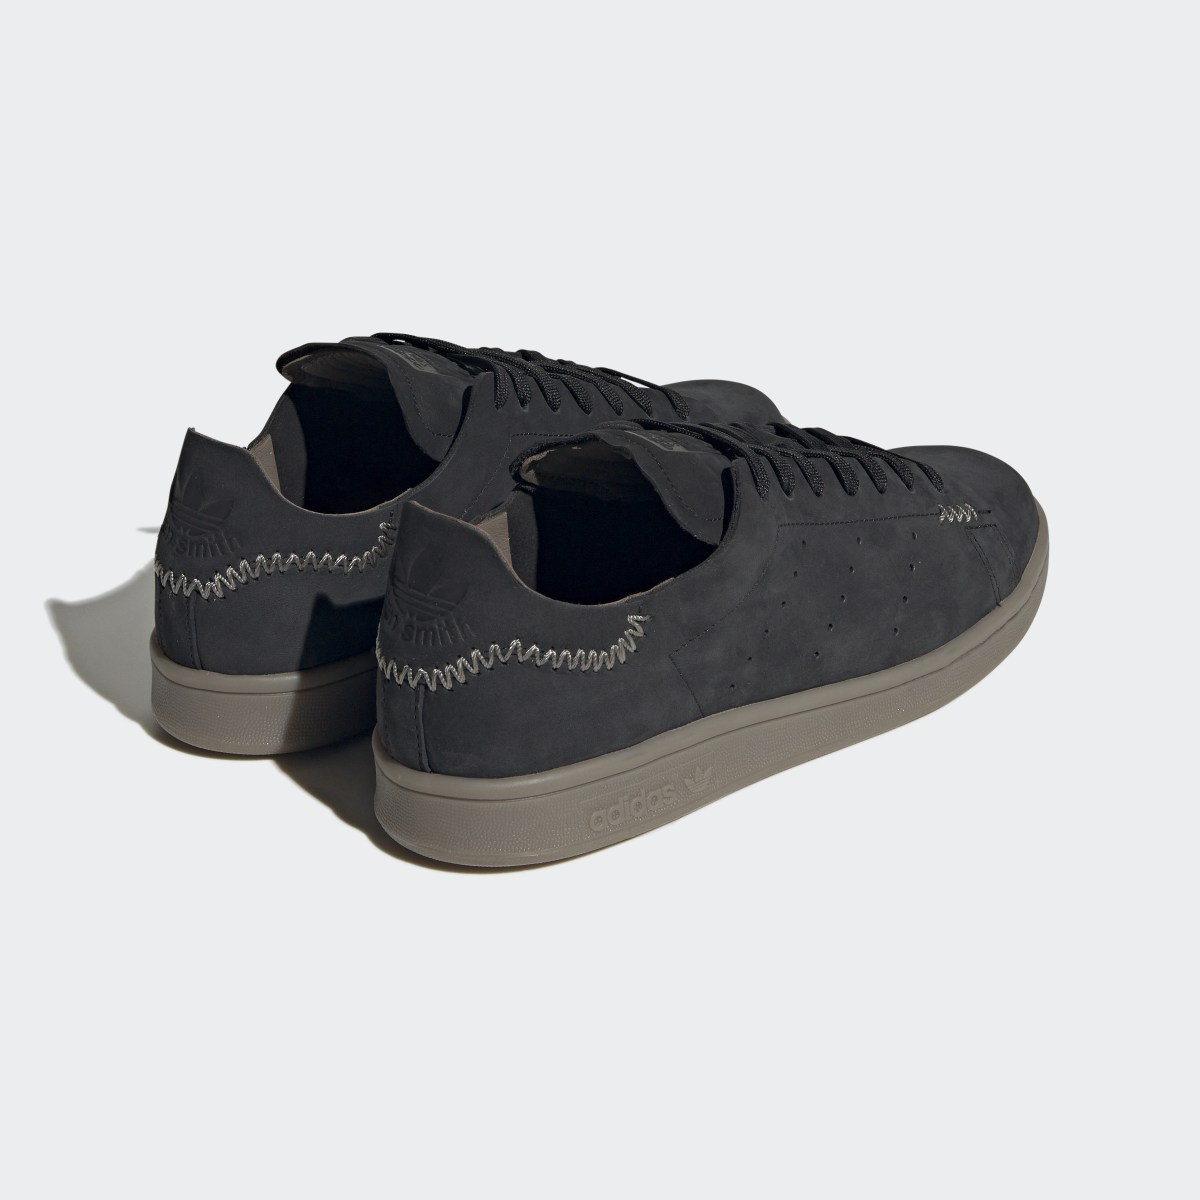 Adidas Stan Smith Recon Shoes. 7